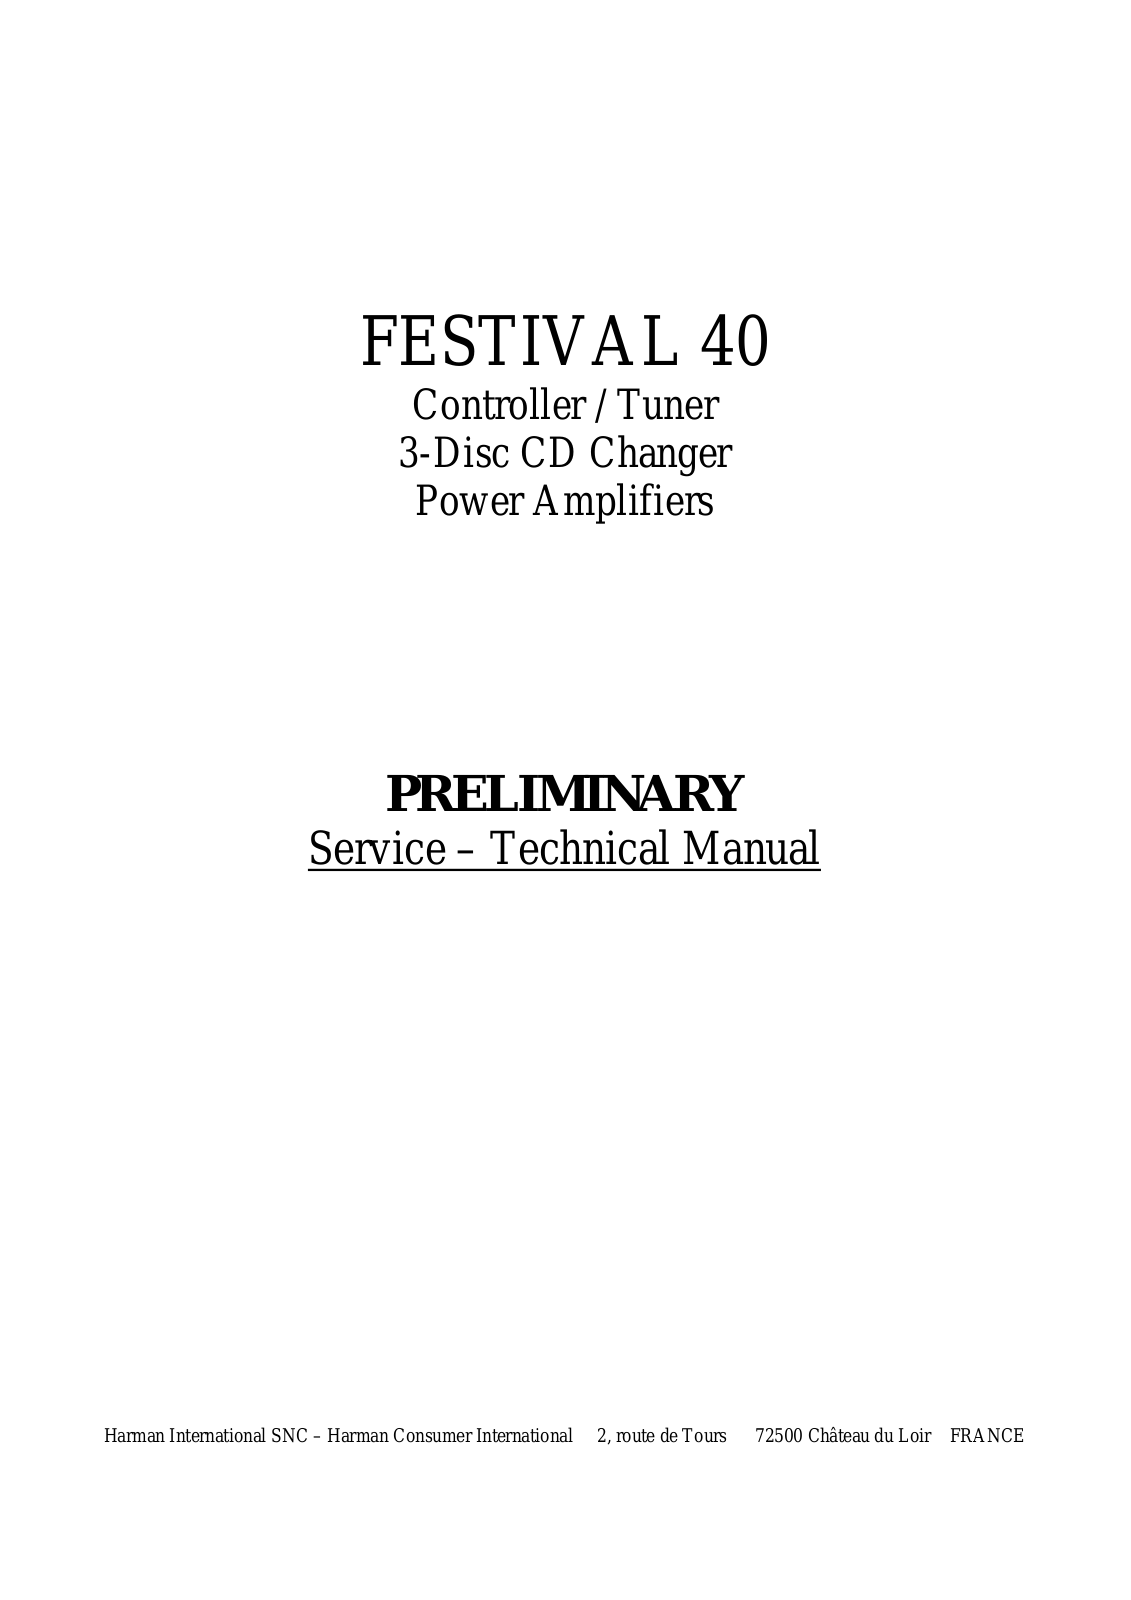 Harman Kardon Festival 40 Service manual